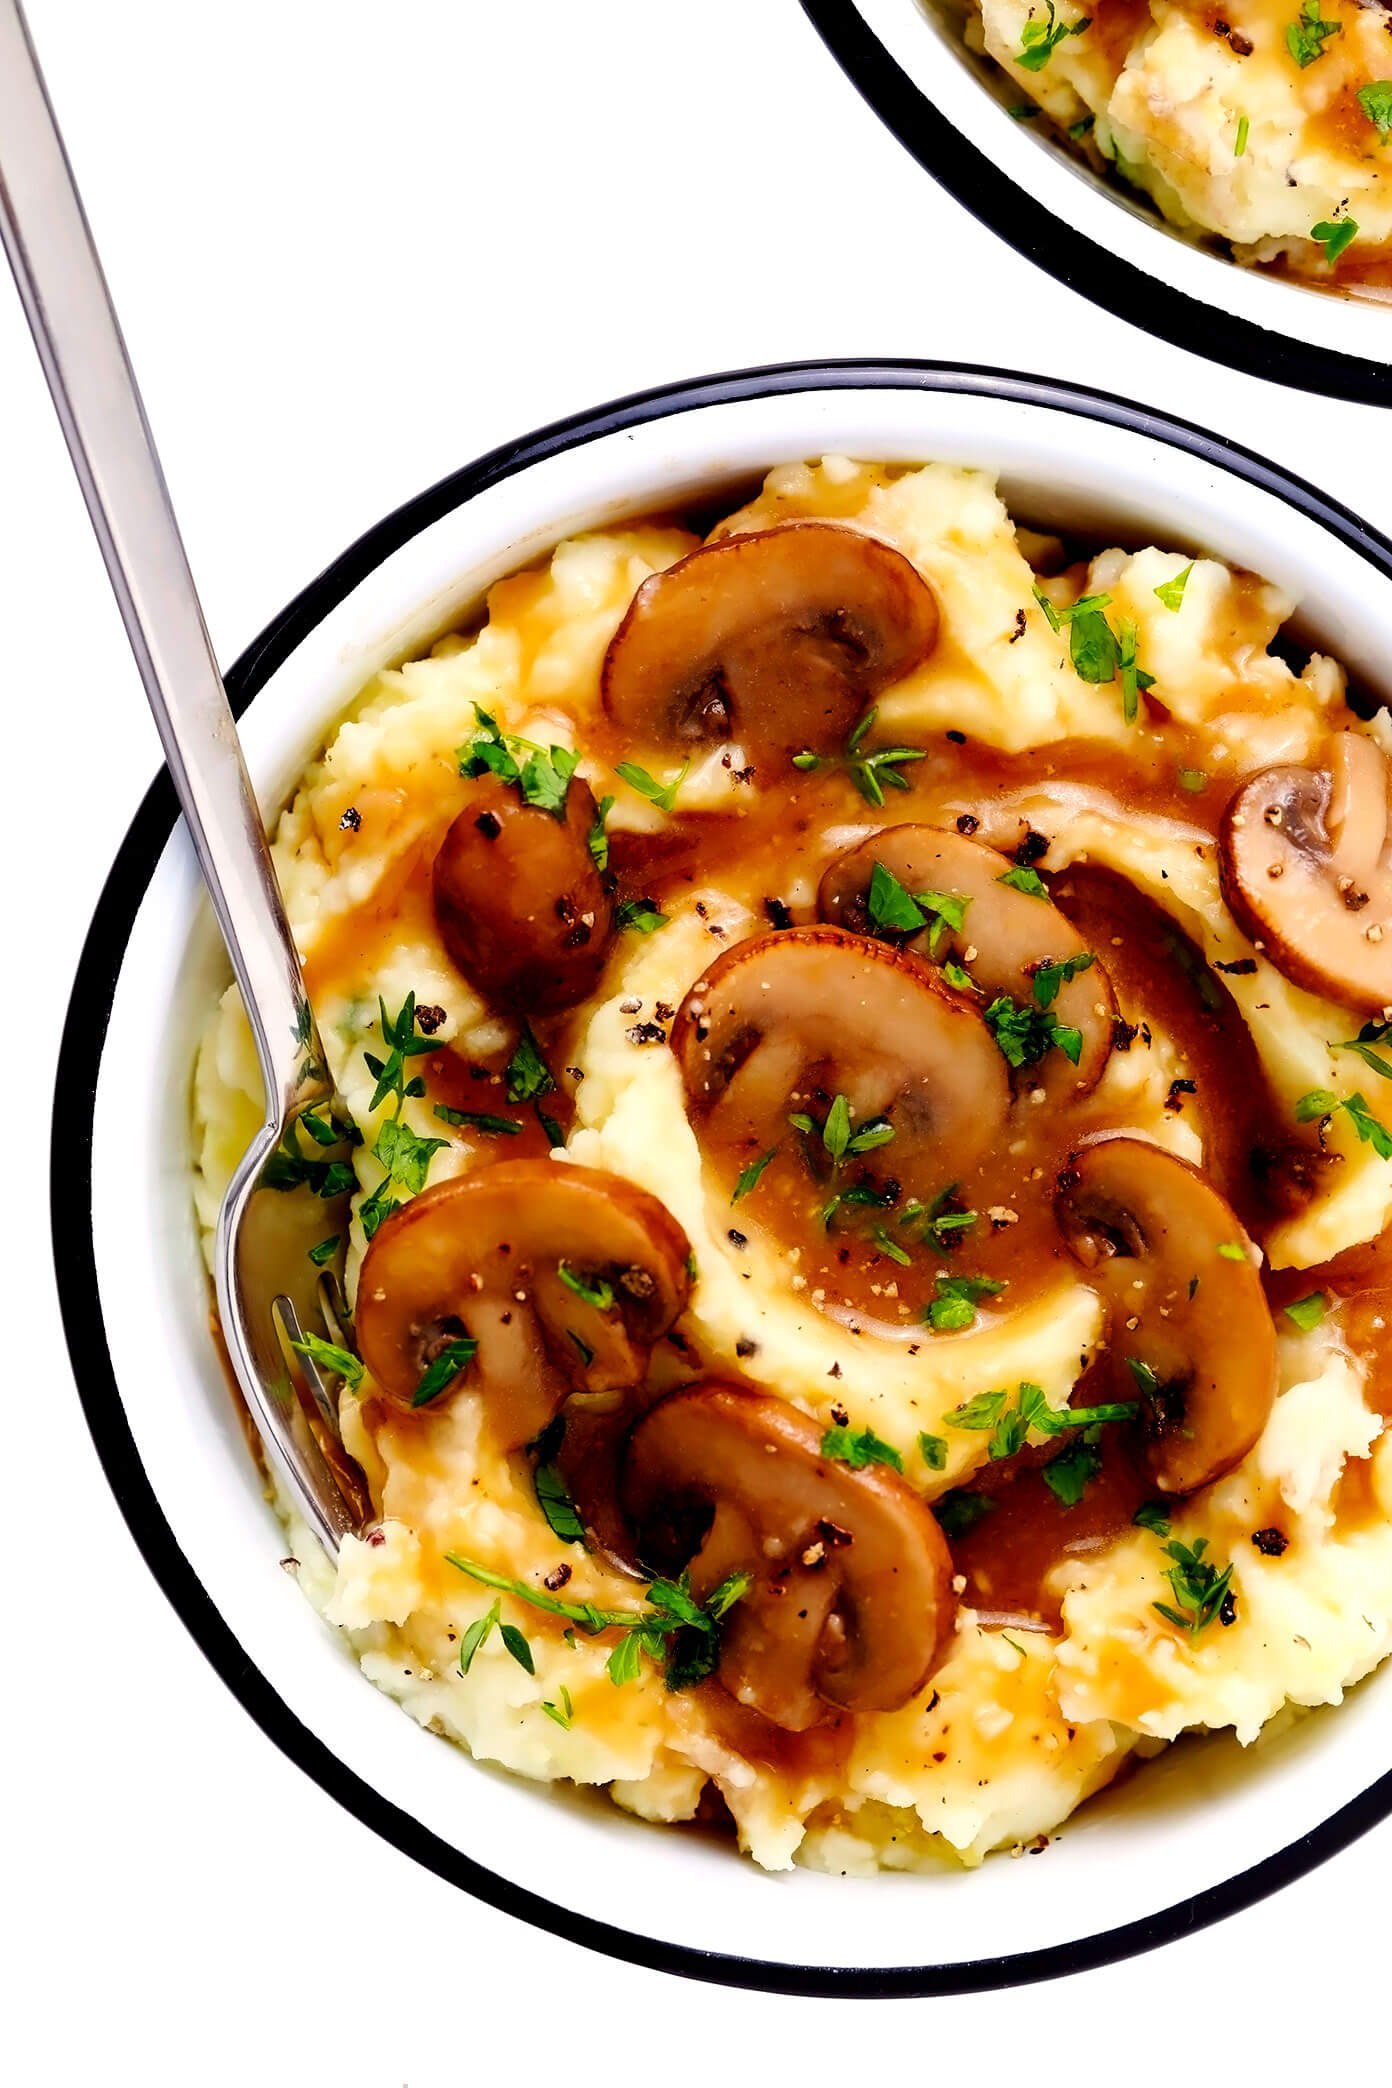 Mashed Potatoes and Vegan Mushroom Gravy